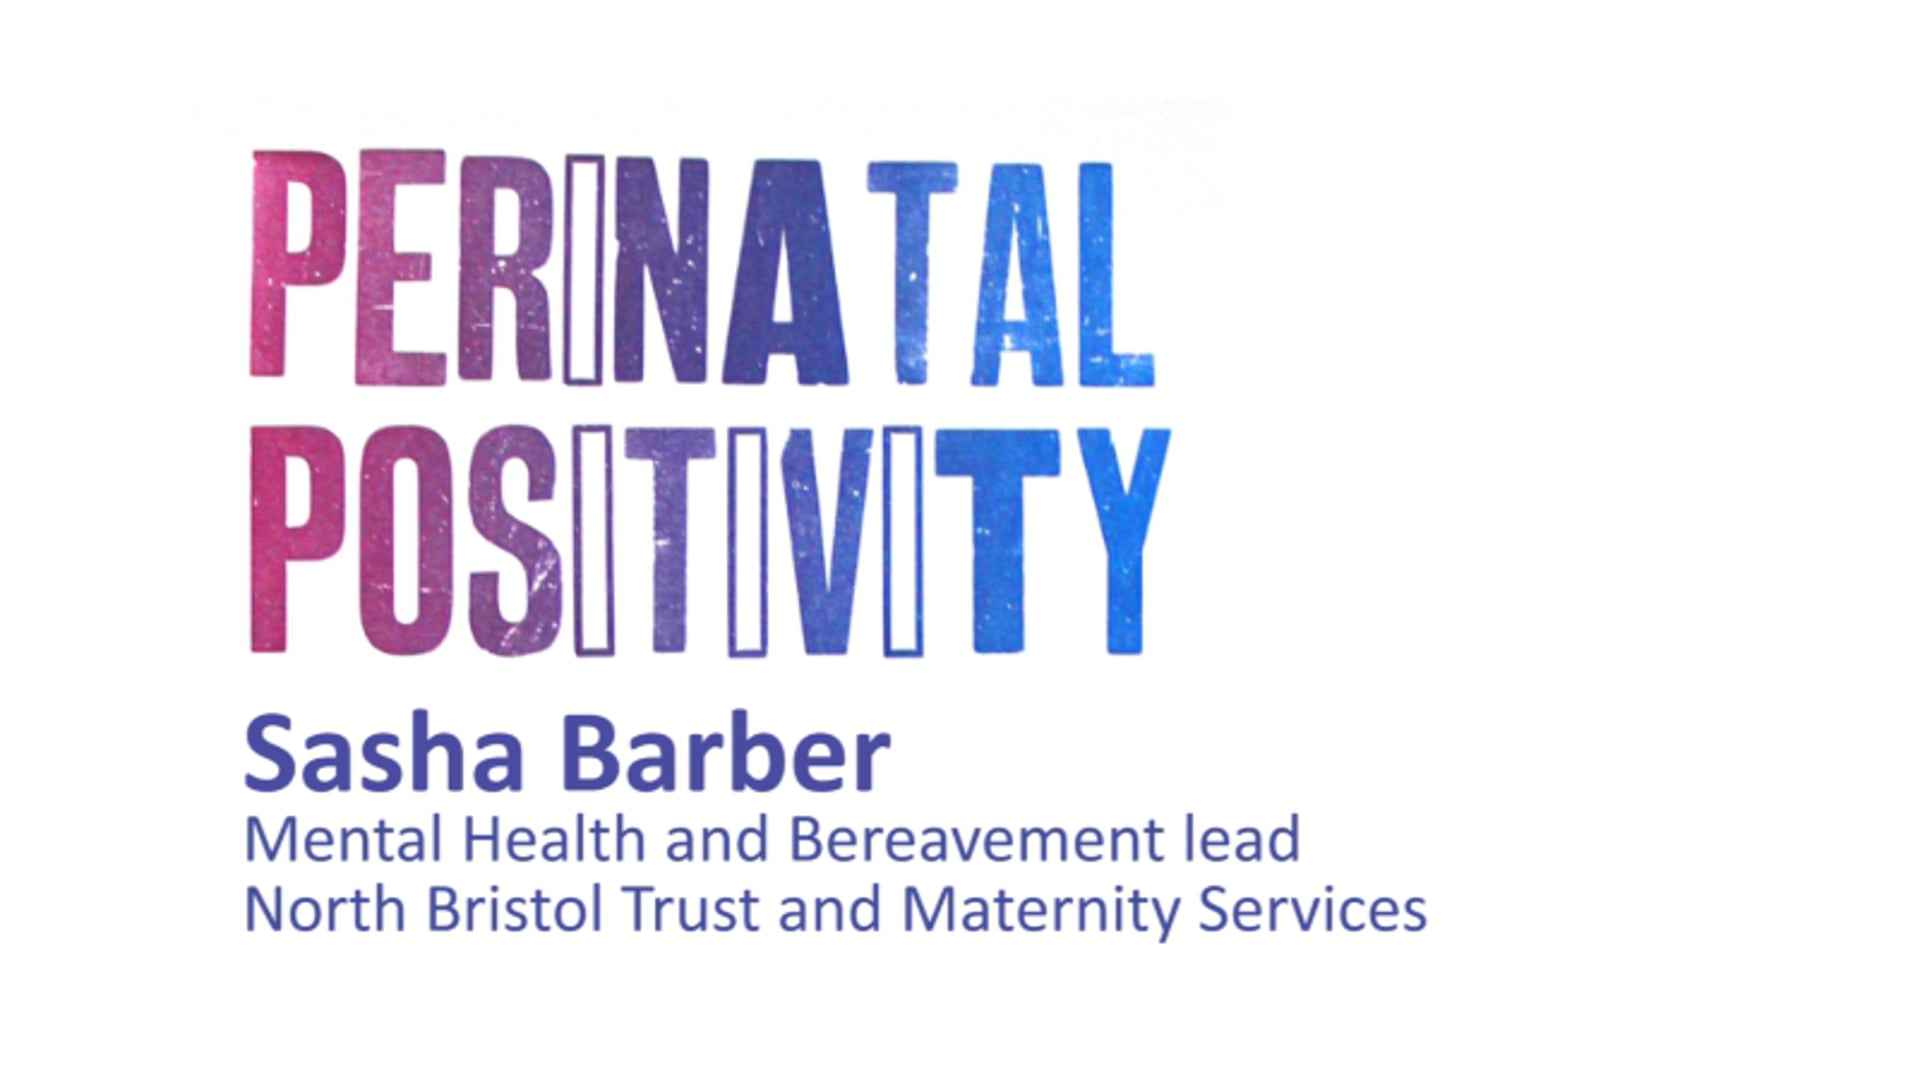 Perinatal Positivity - Sasha Barber